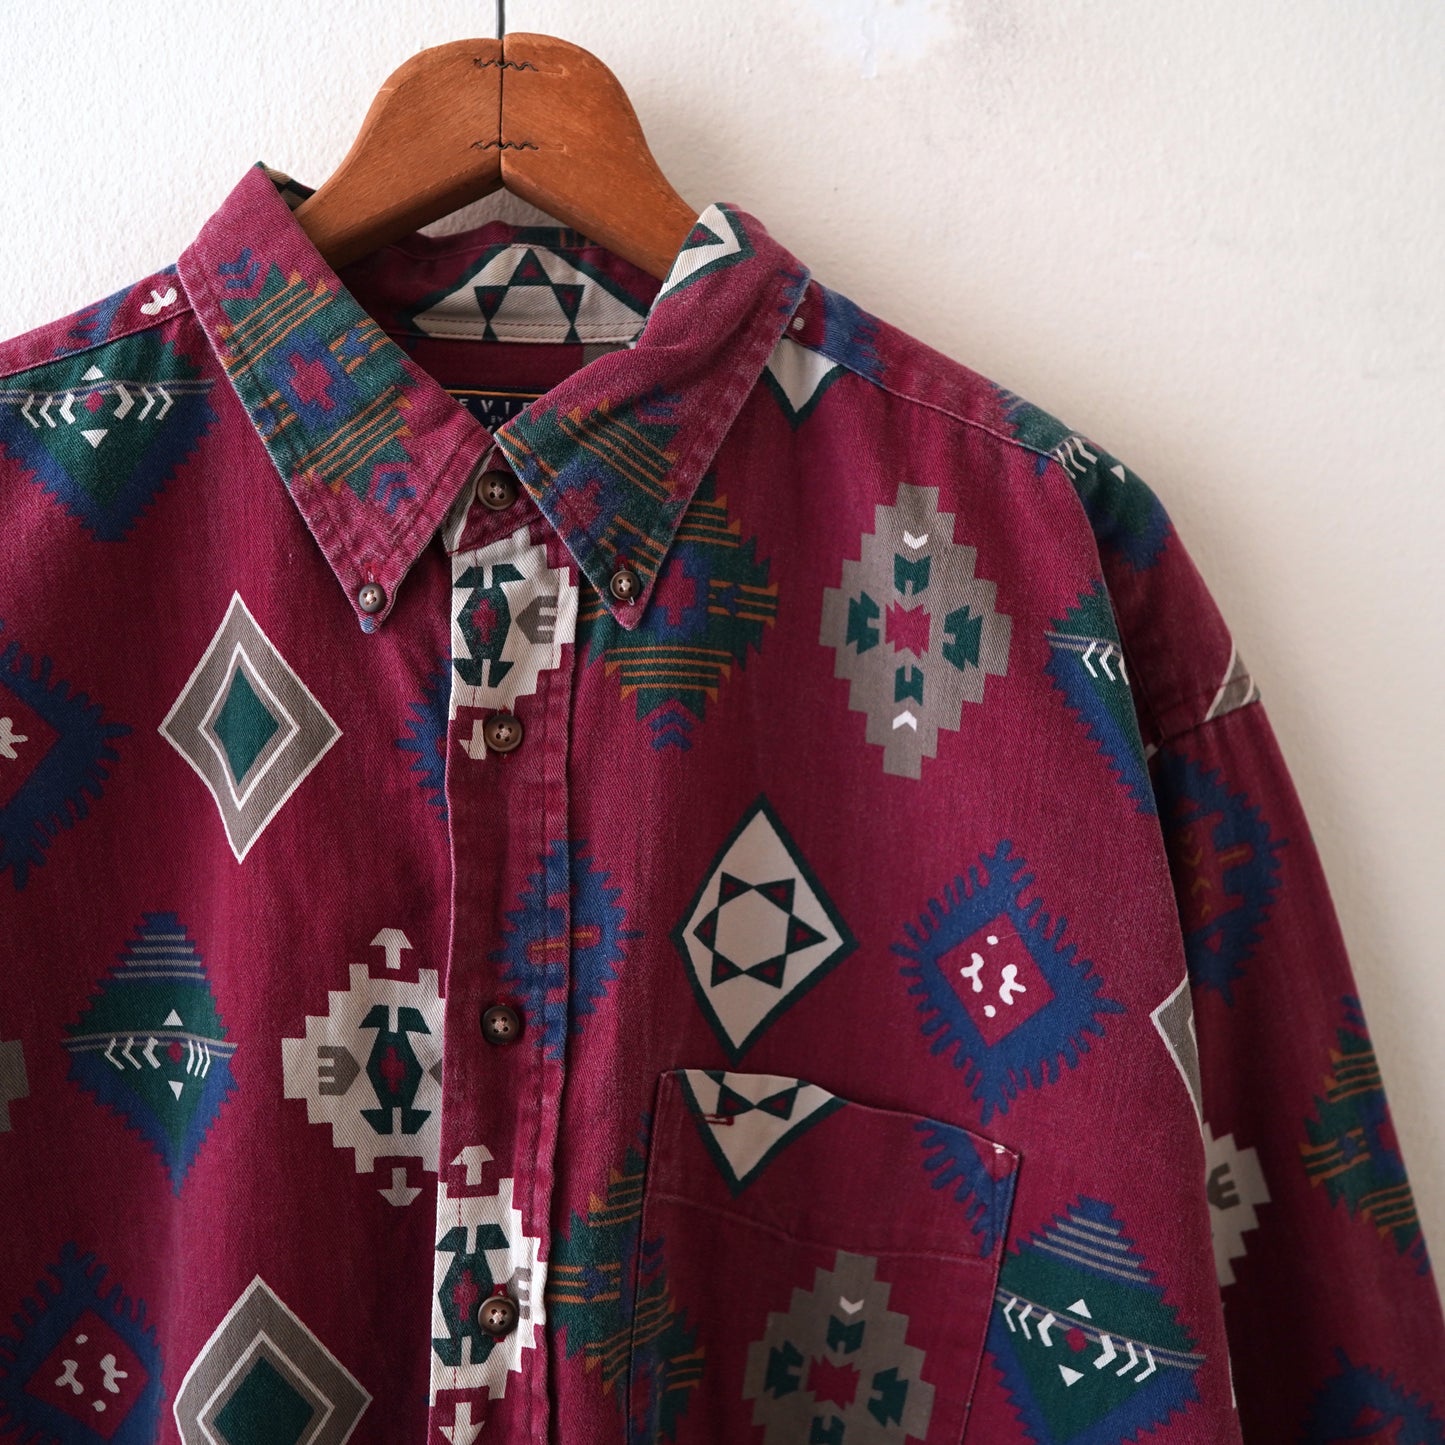 native pattern button collar shirt